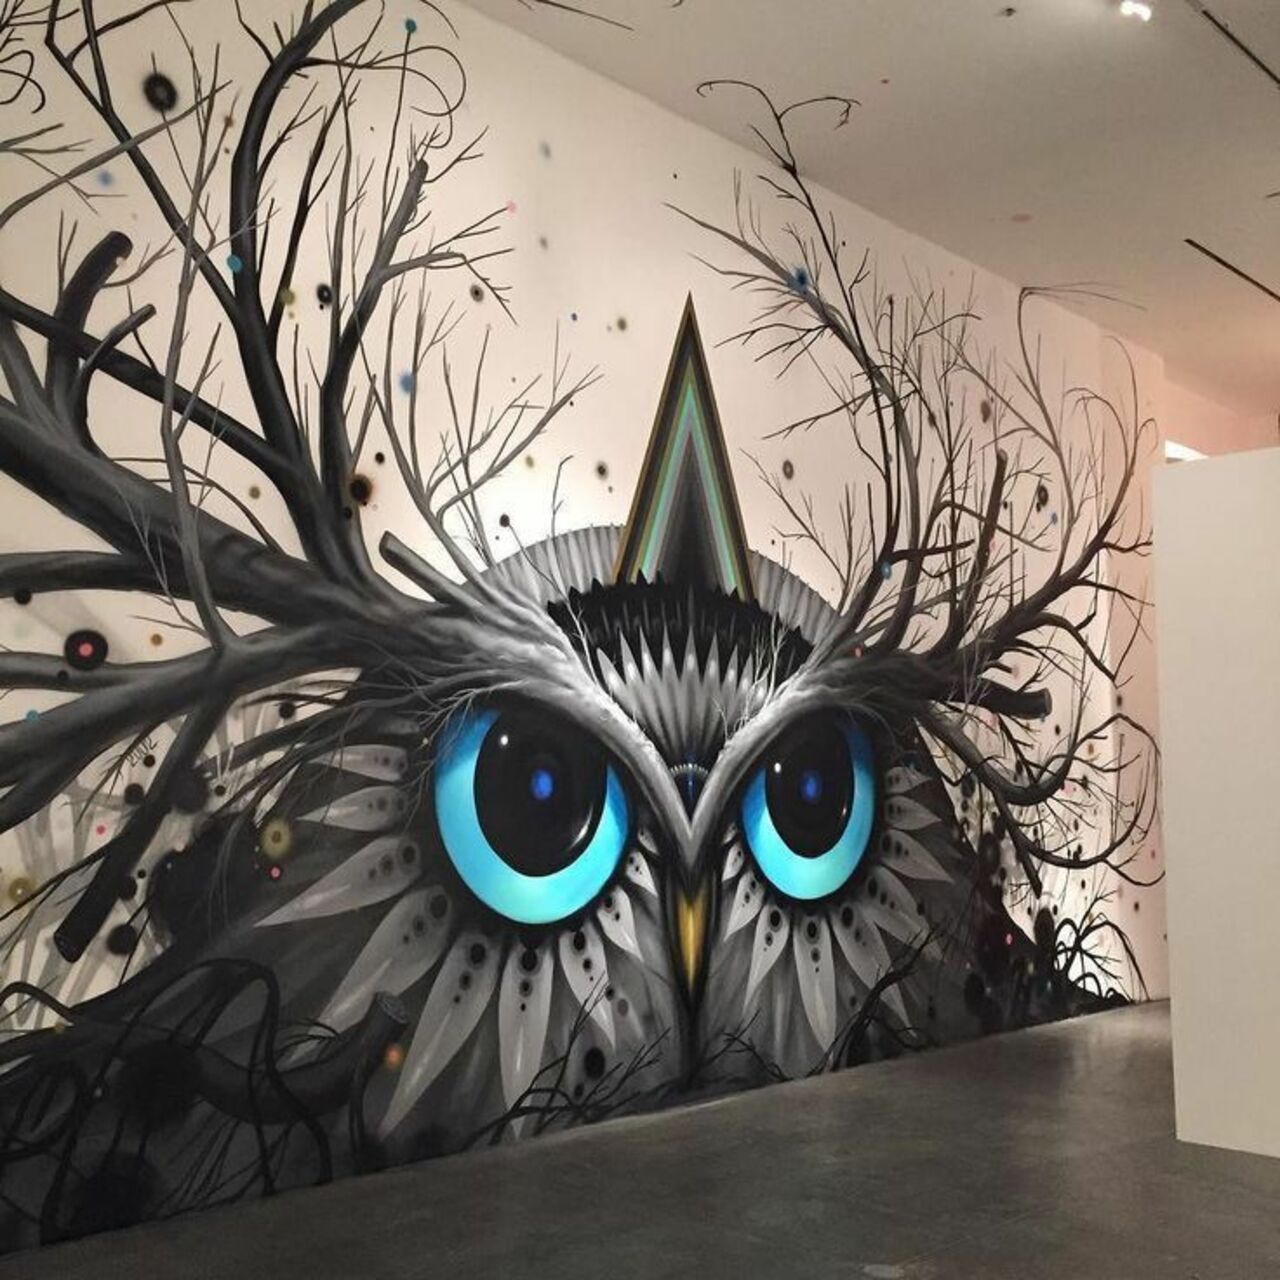 Chaos Owl by Jeff Soto#streetart #mural #graffiti #art https://t.co/4K4bz82tN4